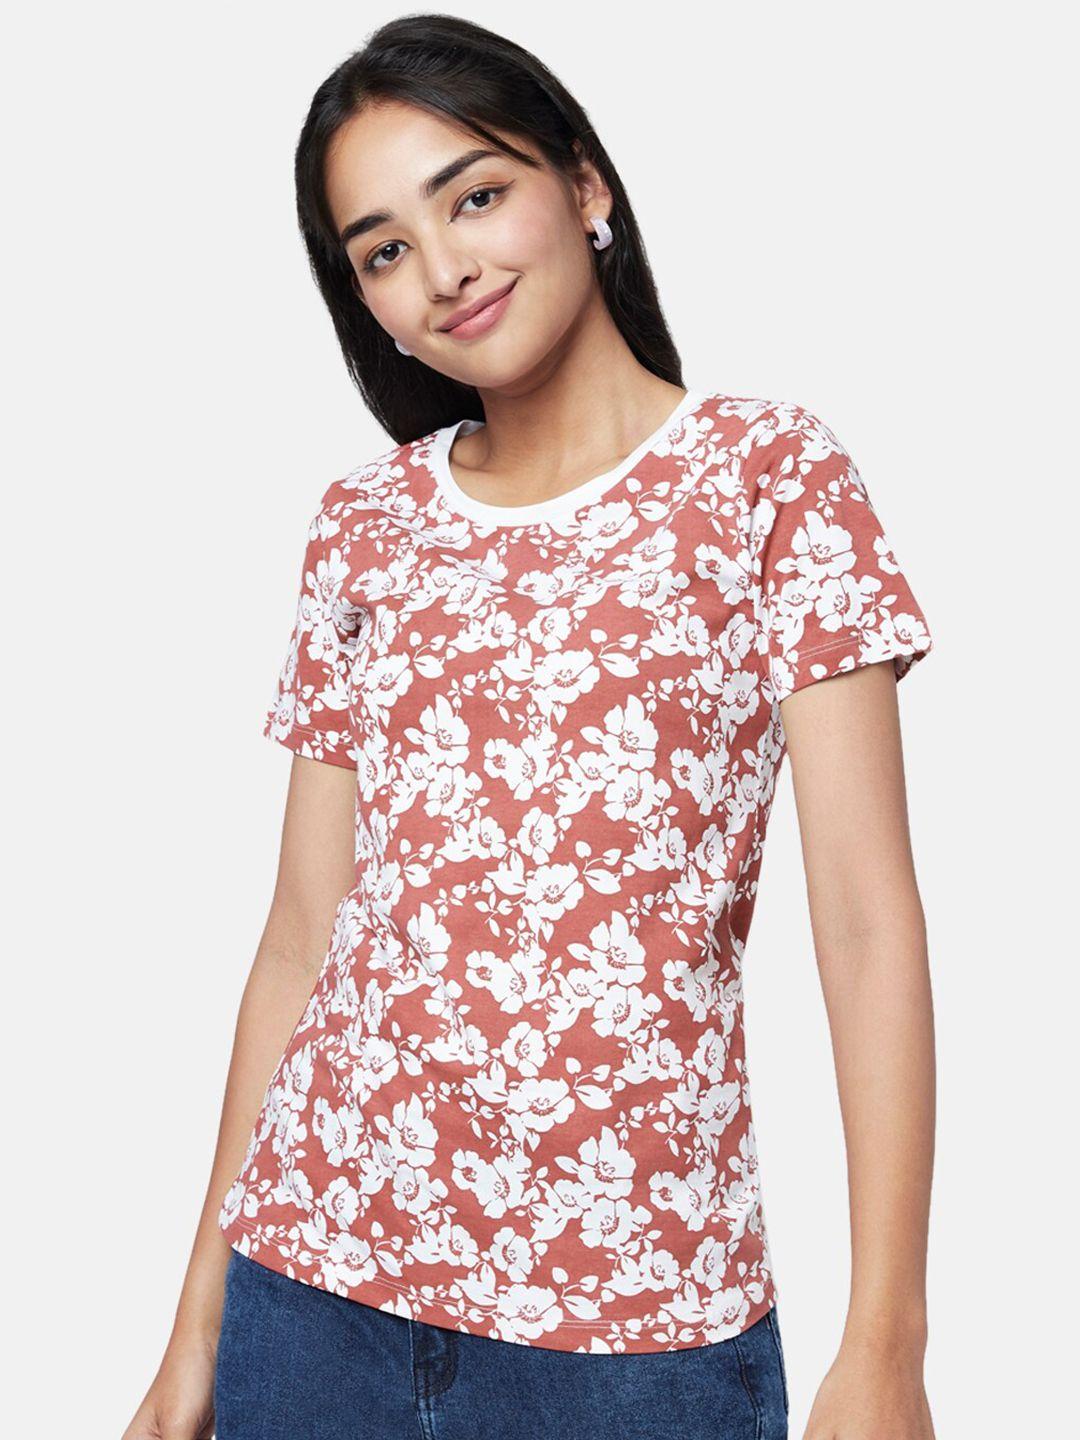 yu by pantaloons women floral printed cotton t-shirt